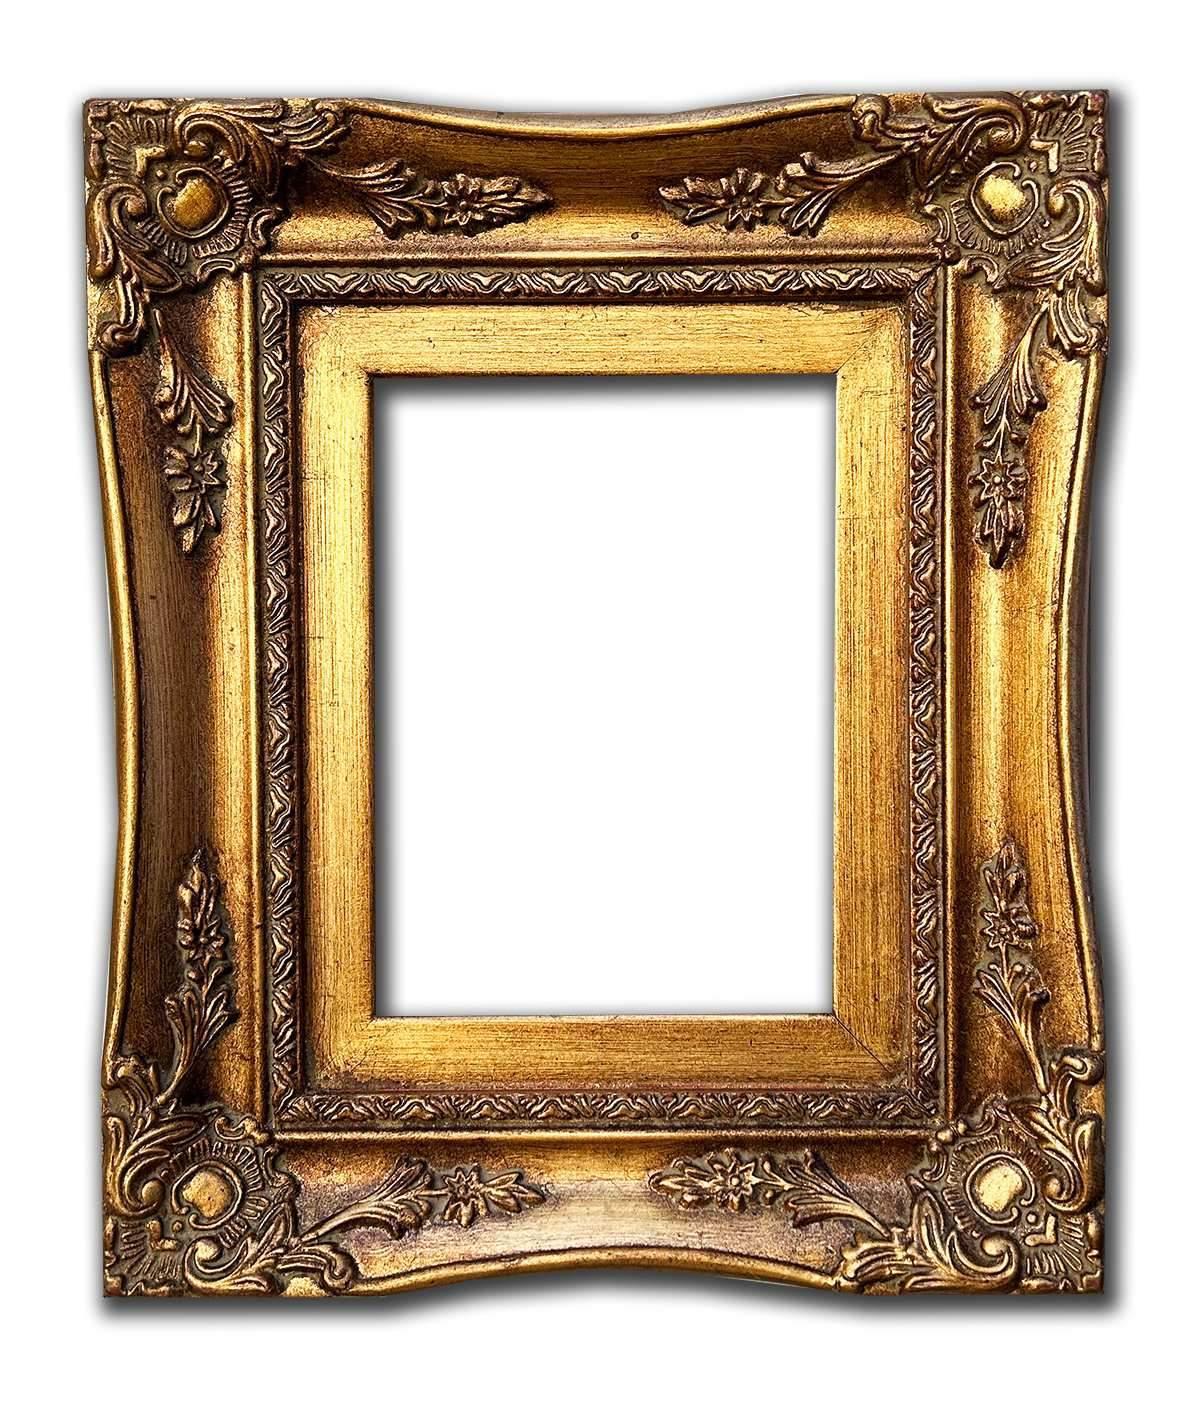 18x23 cm eller 7x9 ins, wooden photo frame